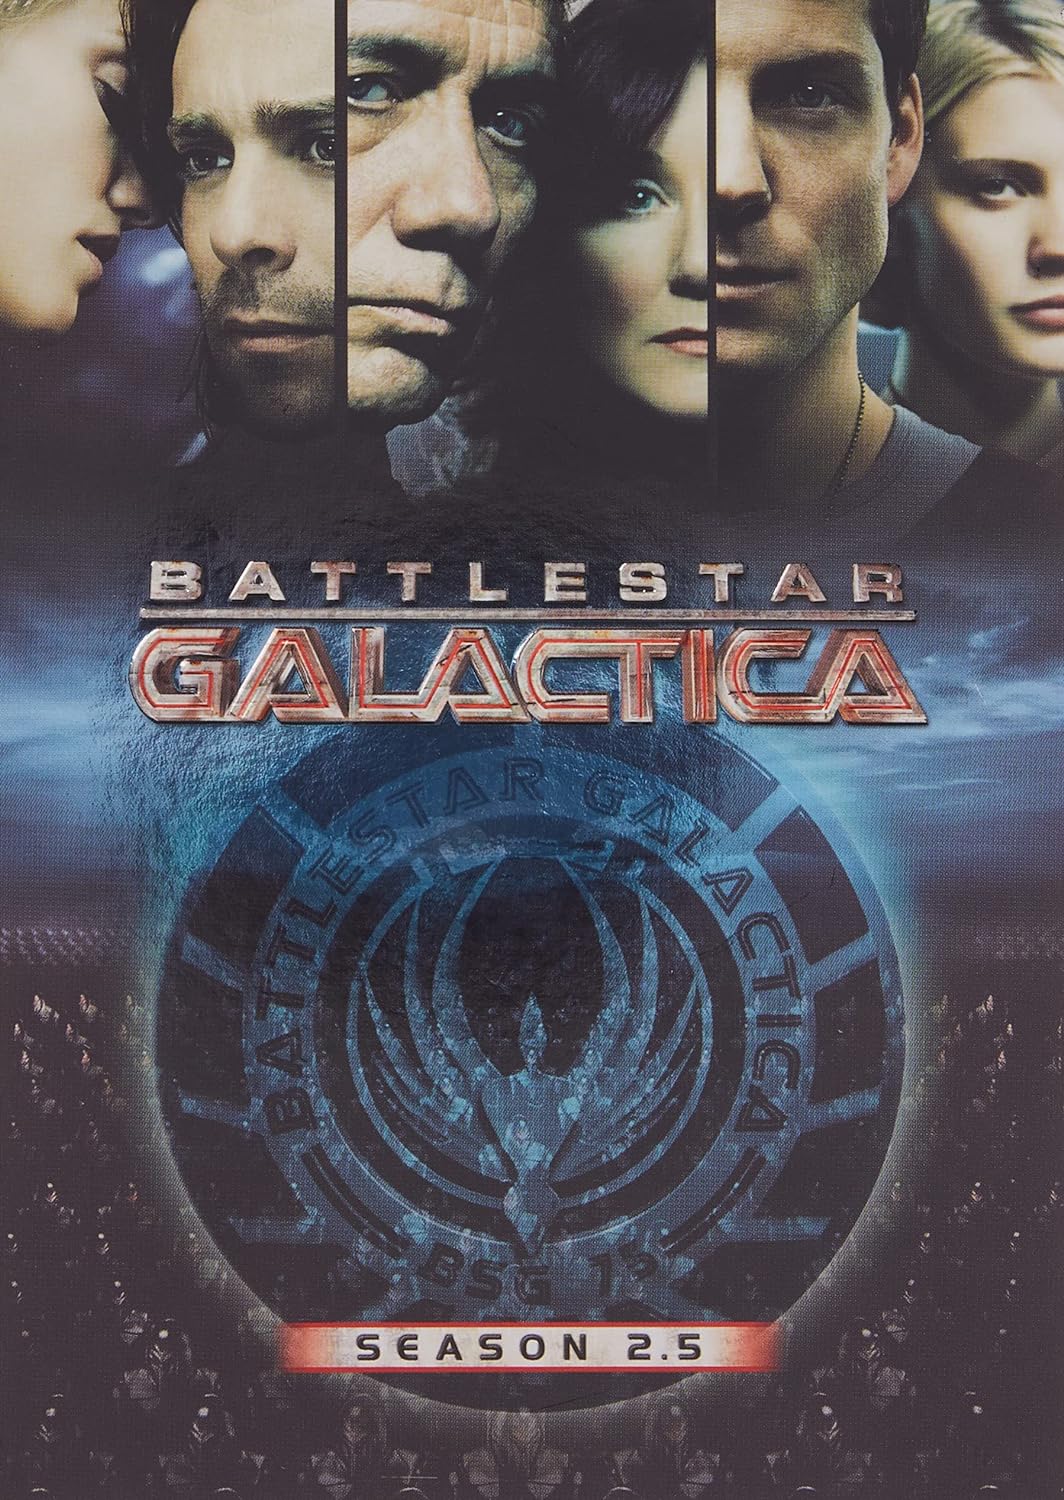 Battlestar Galactica Season 2.5